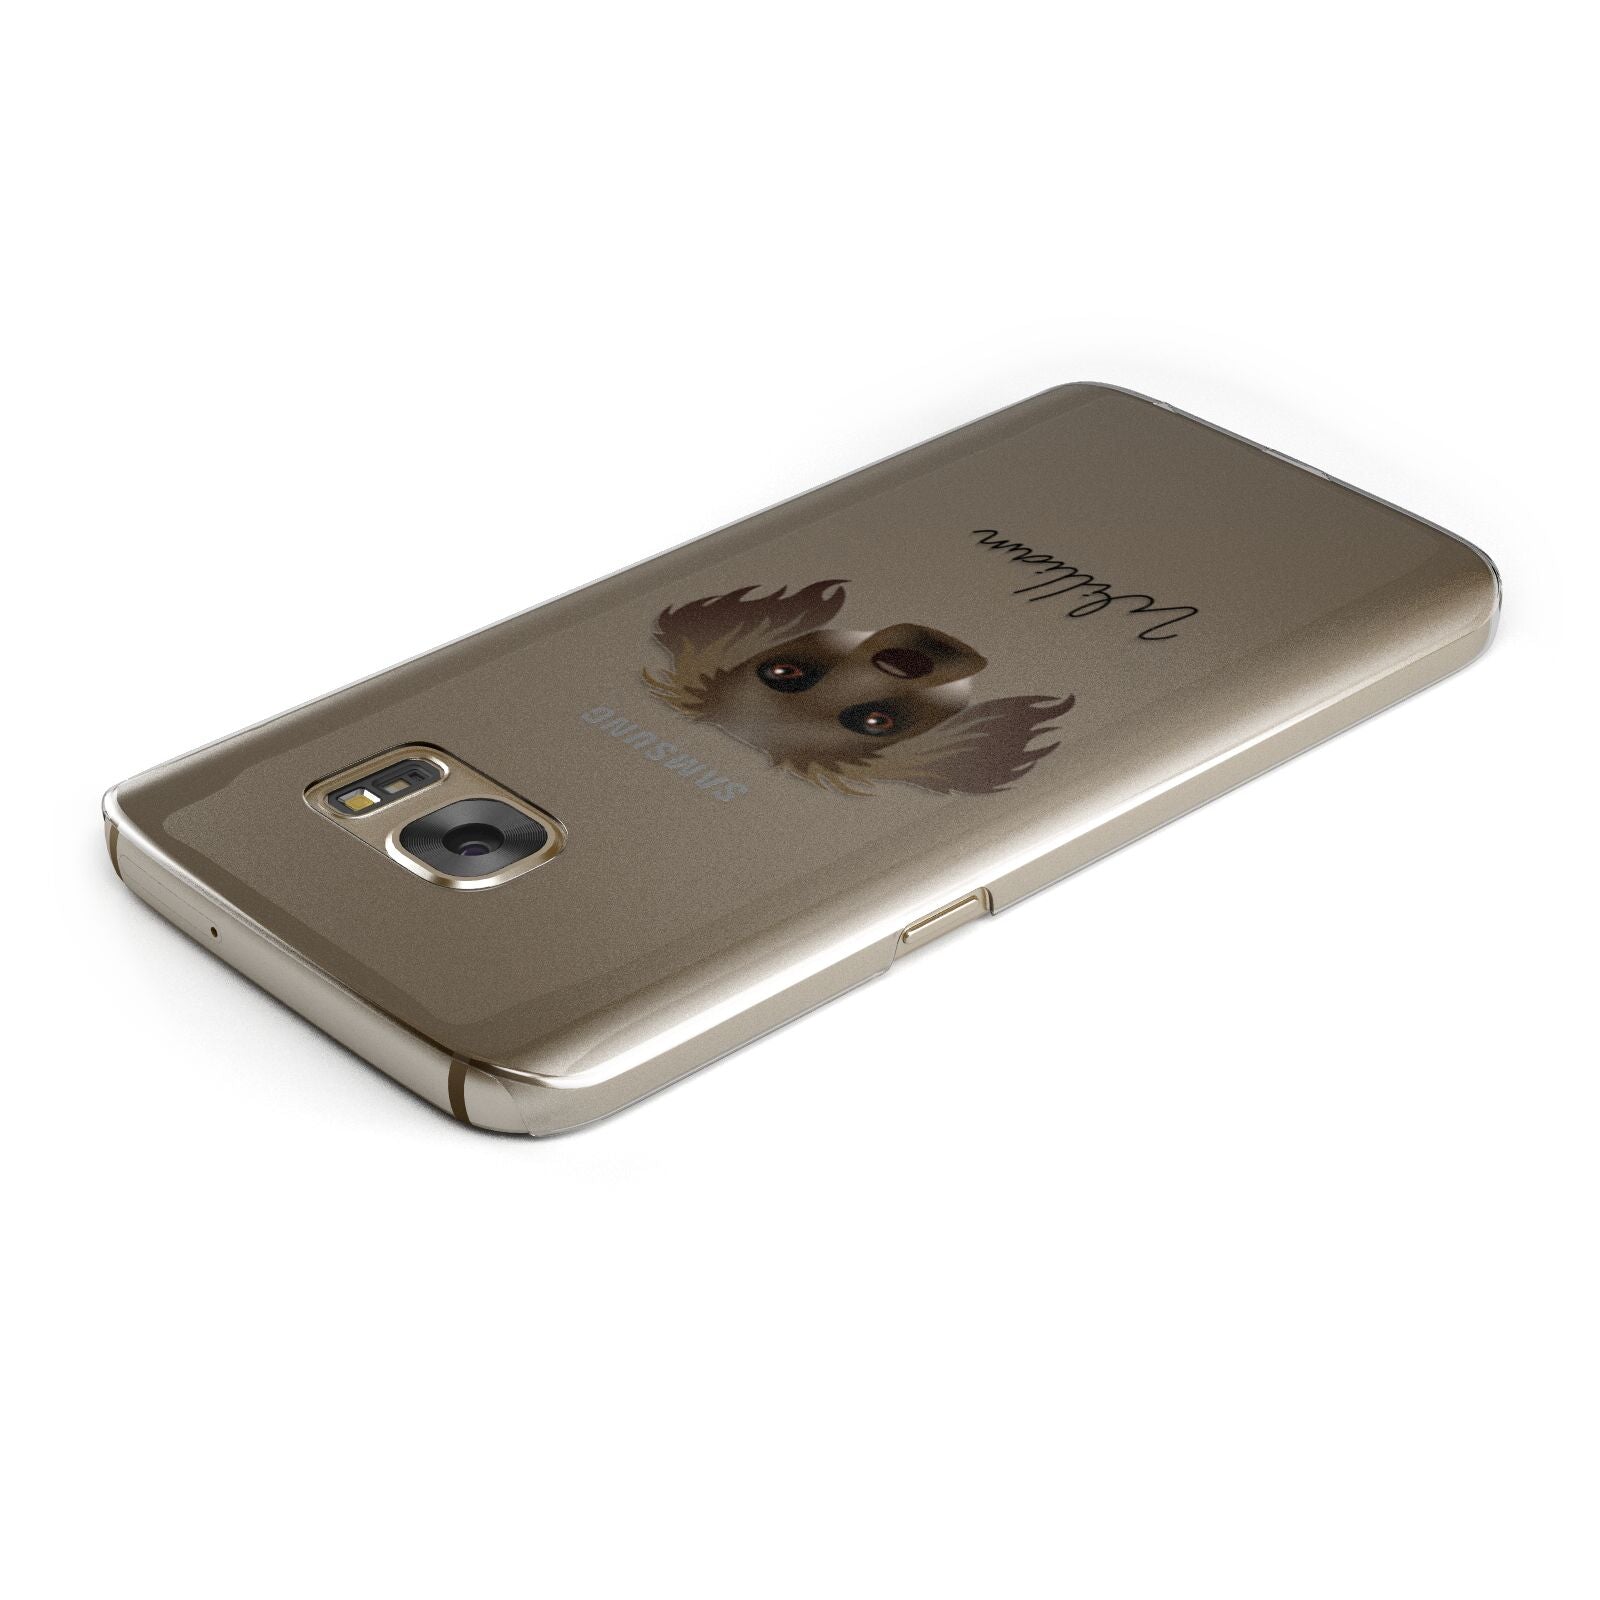 Dameranian Personalised Samsung Galaxy Case Top Cutout